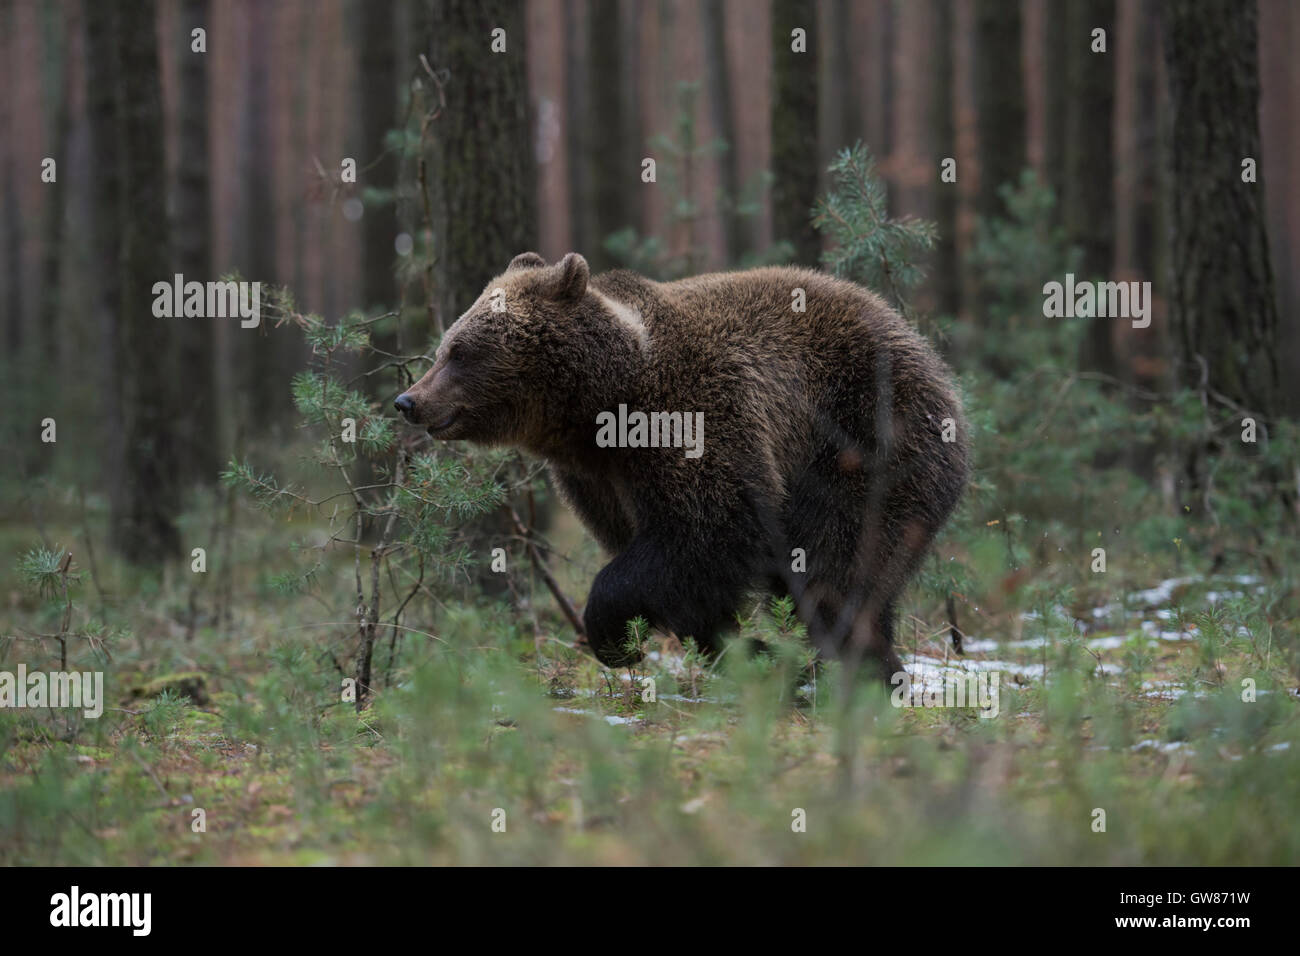 European Brown Bear / Braunbaer ( Ursus arctos ), young animal, running fast through the undergrowth of a pine forest. Stock Photo